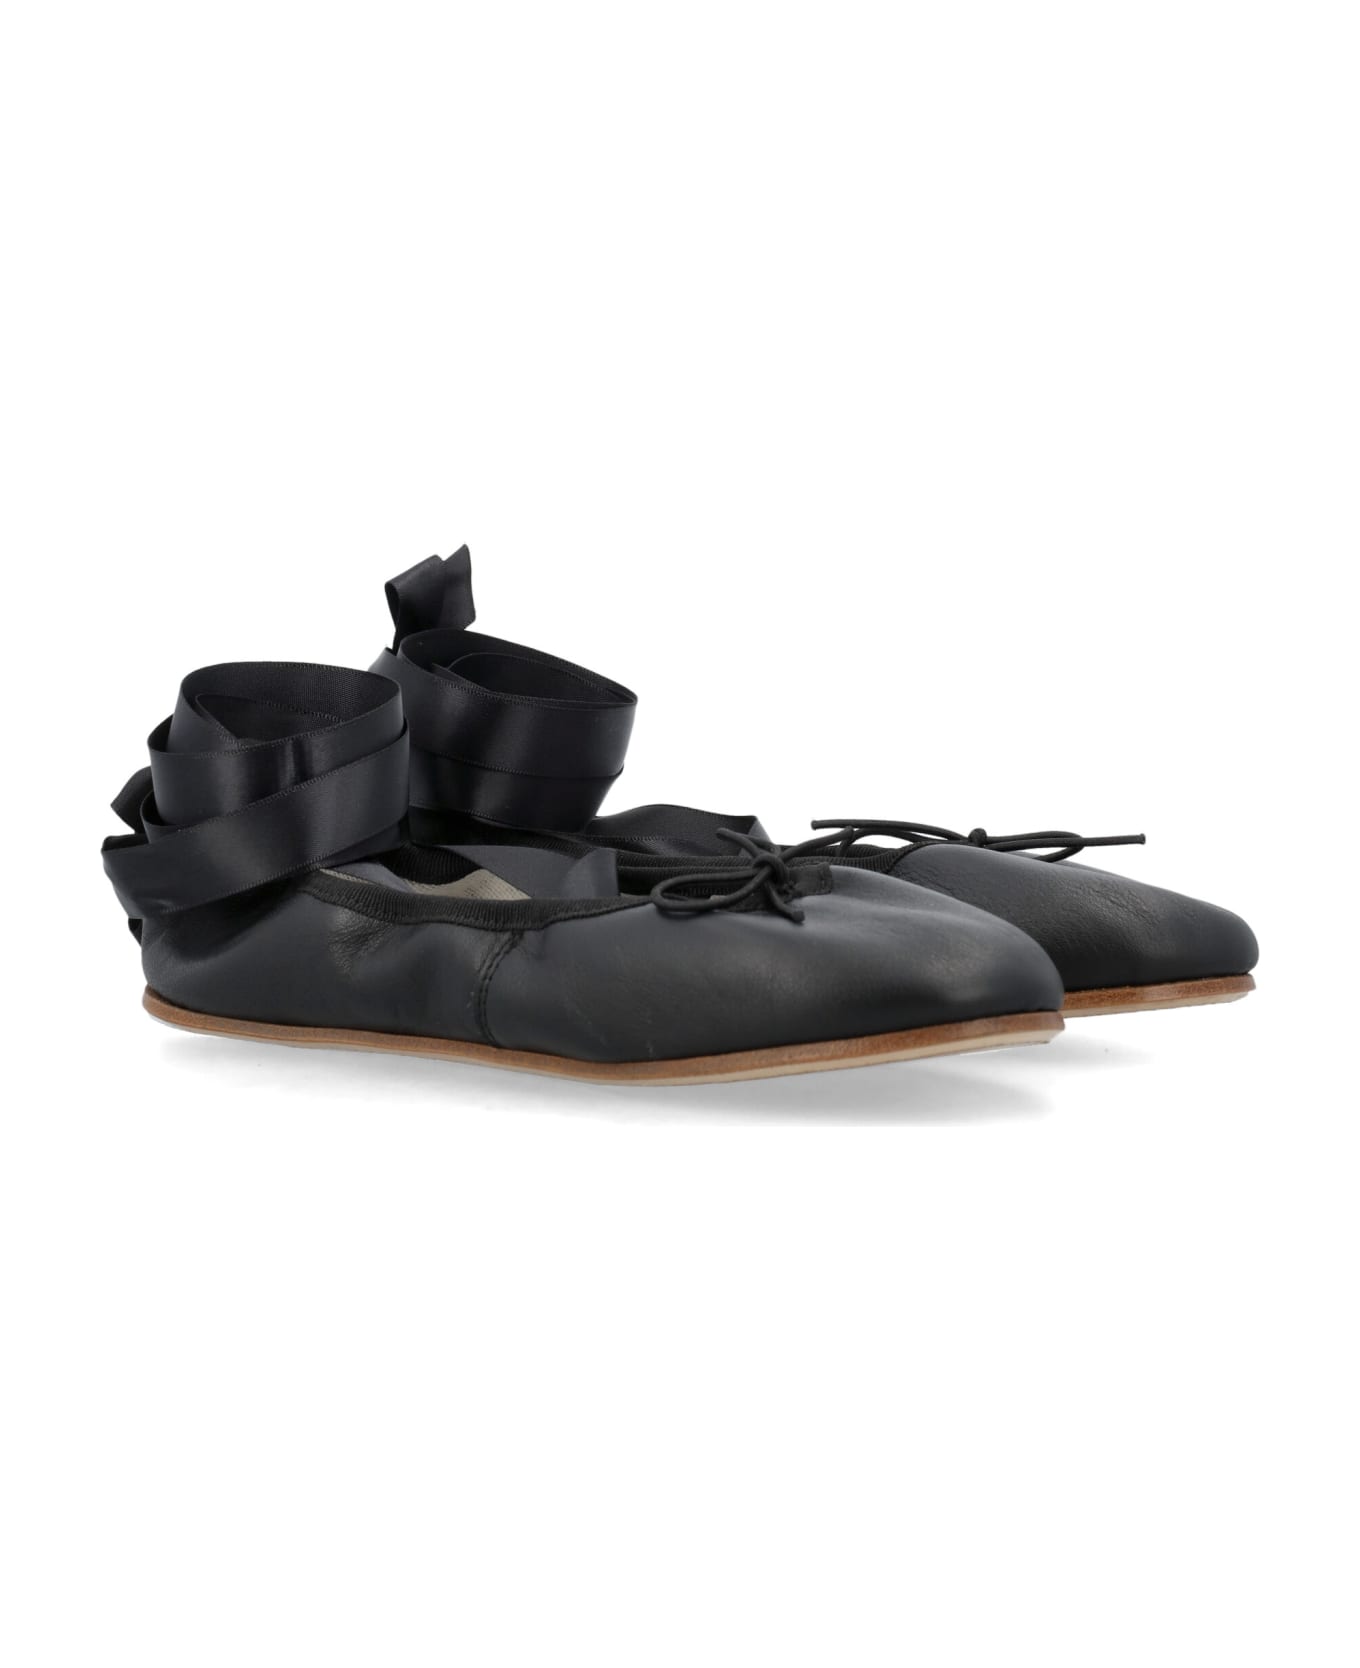 Repetto Sophia Ballerina Shoes - Noir フラットシューズ